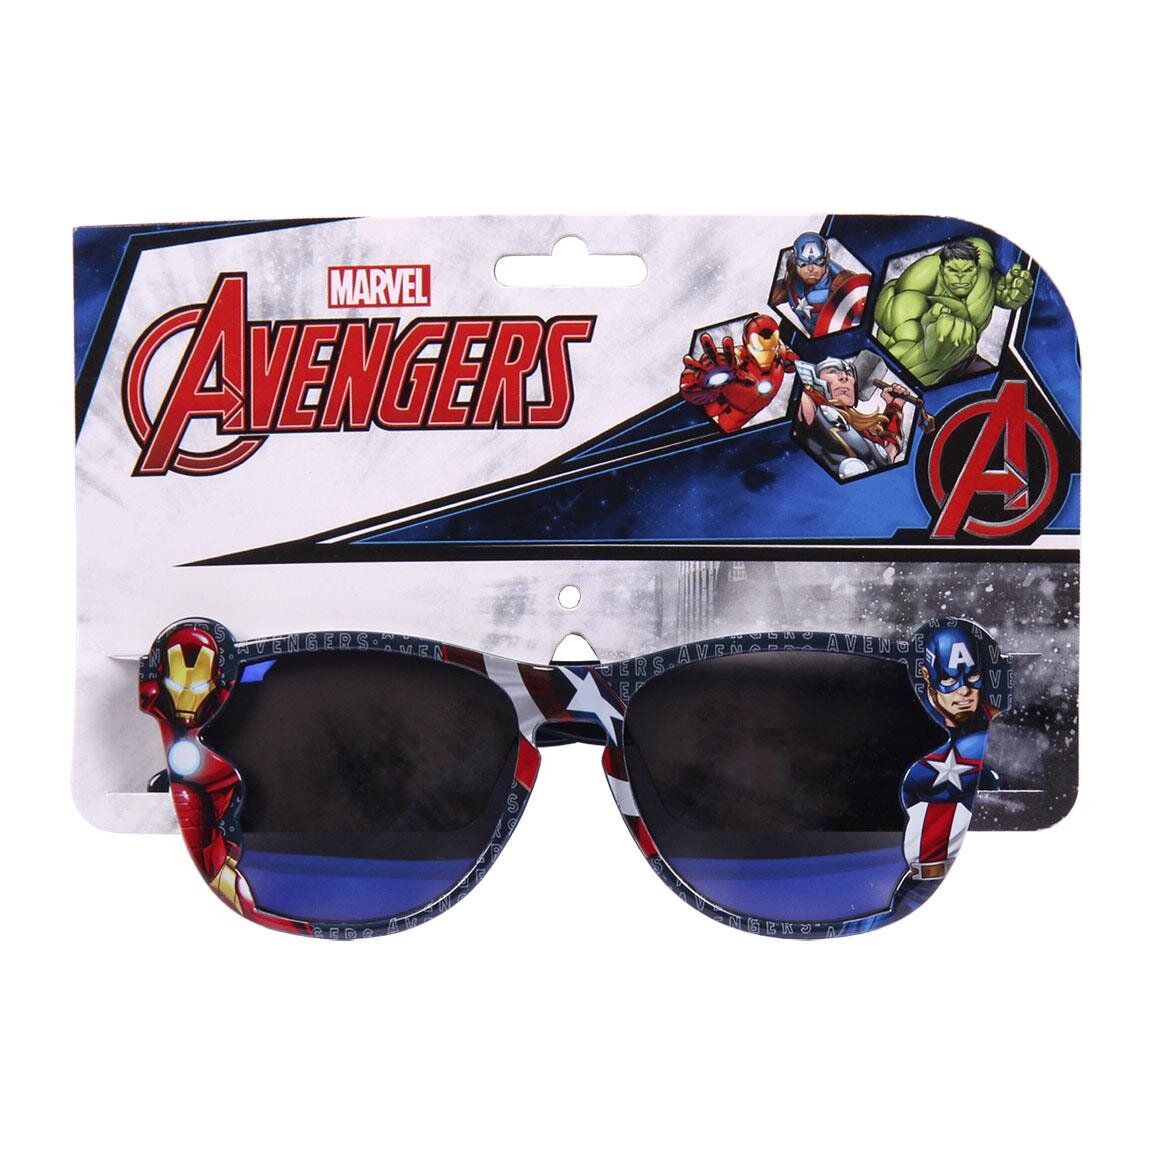 Avengers Marvel - Sonnenbrille für Kinder